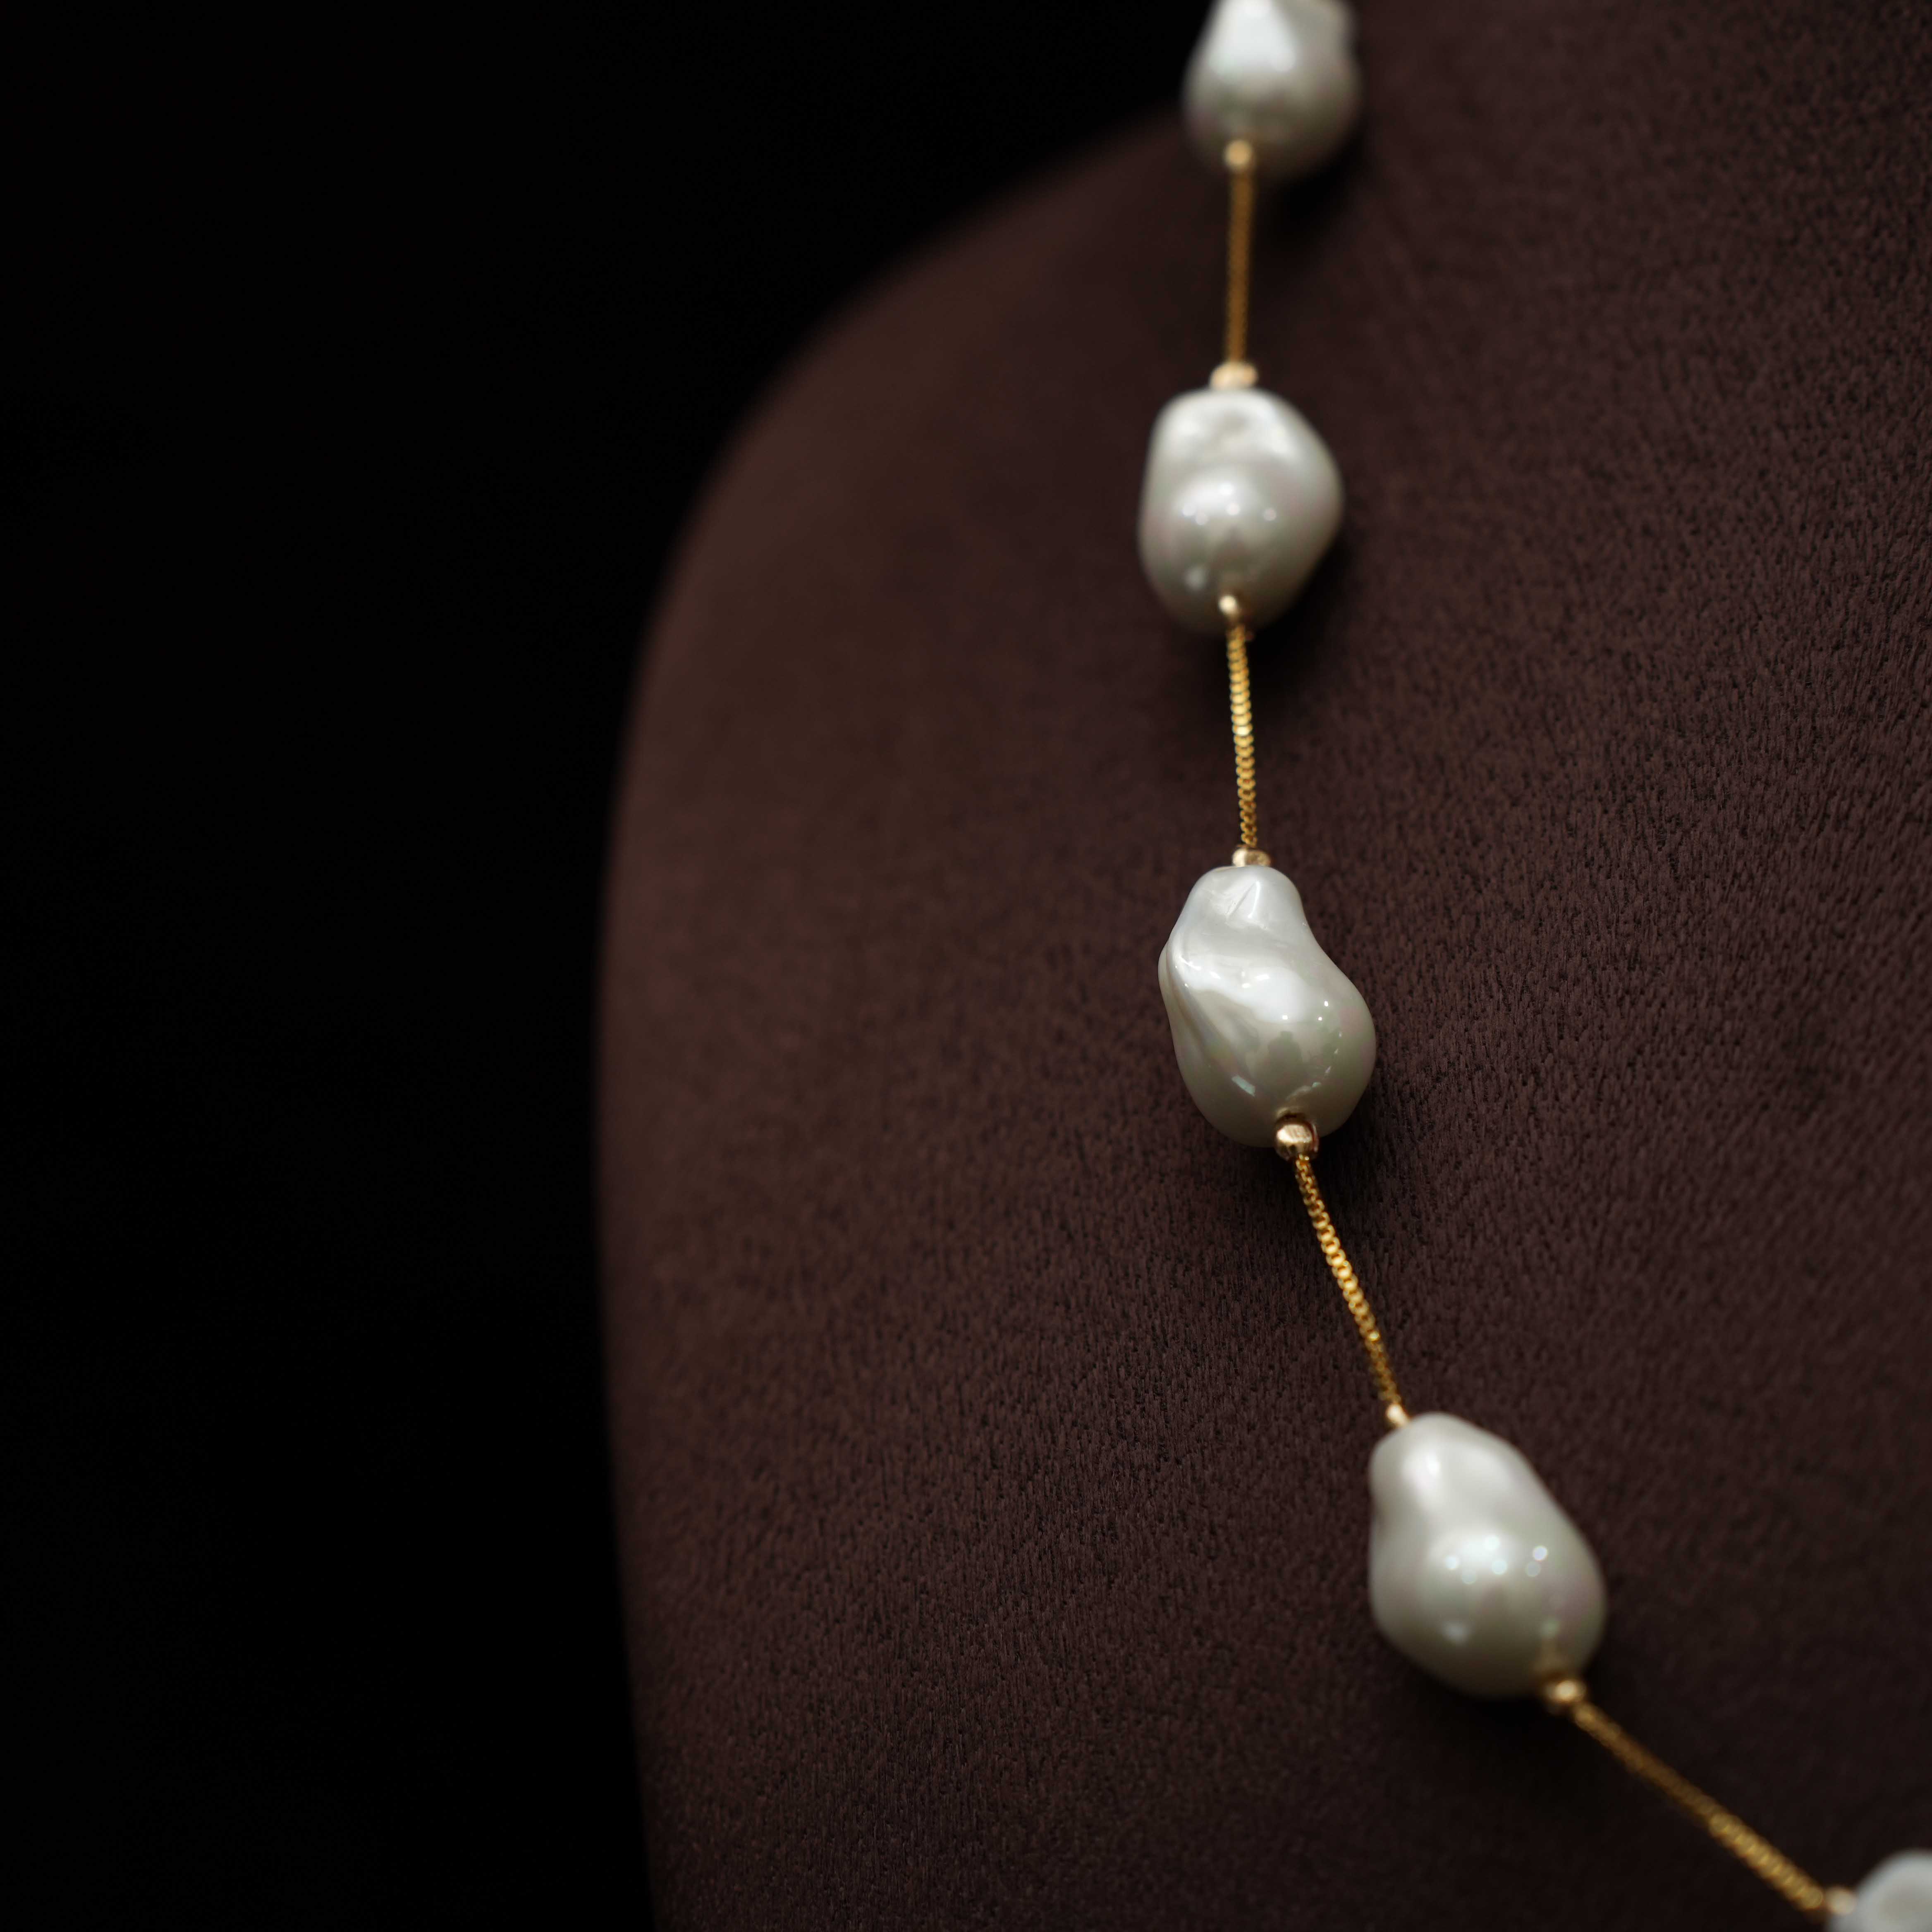 Ivanika Minimalist Pearl Necklace